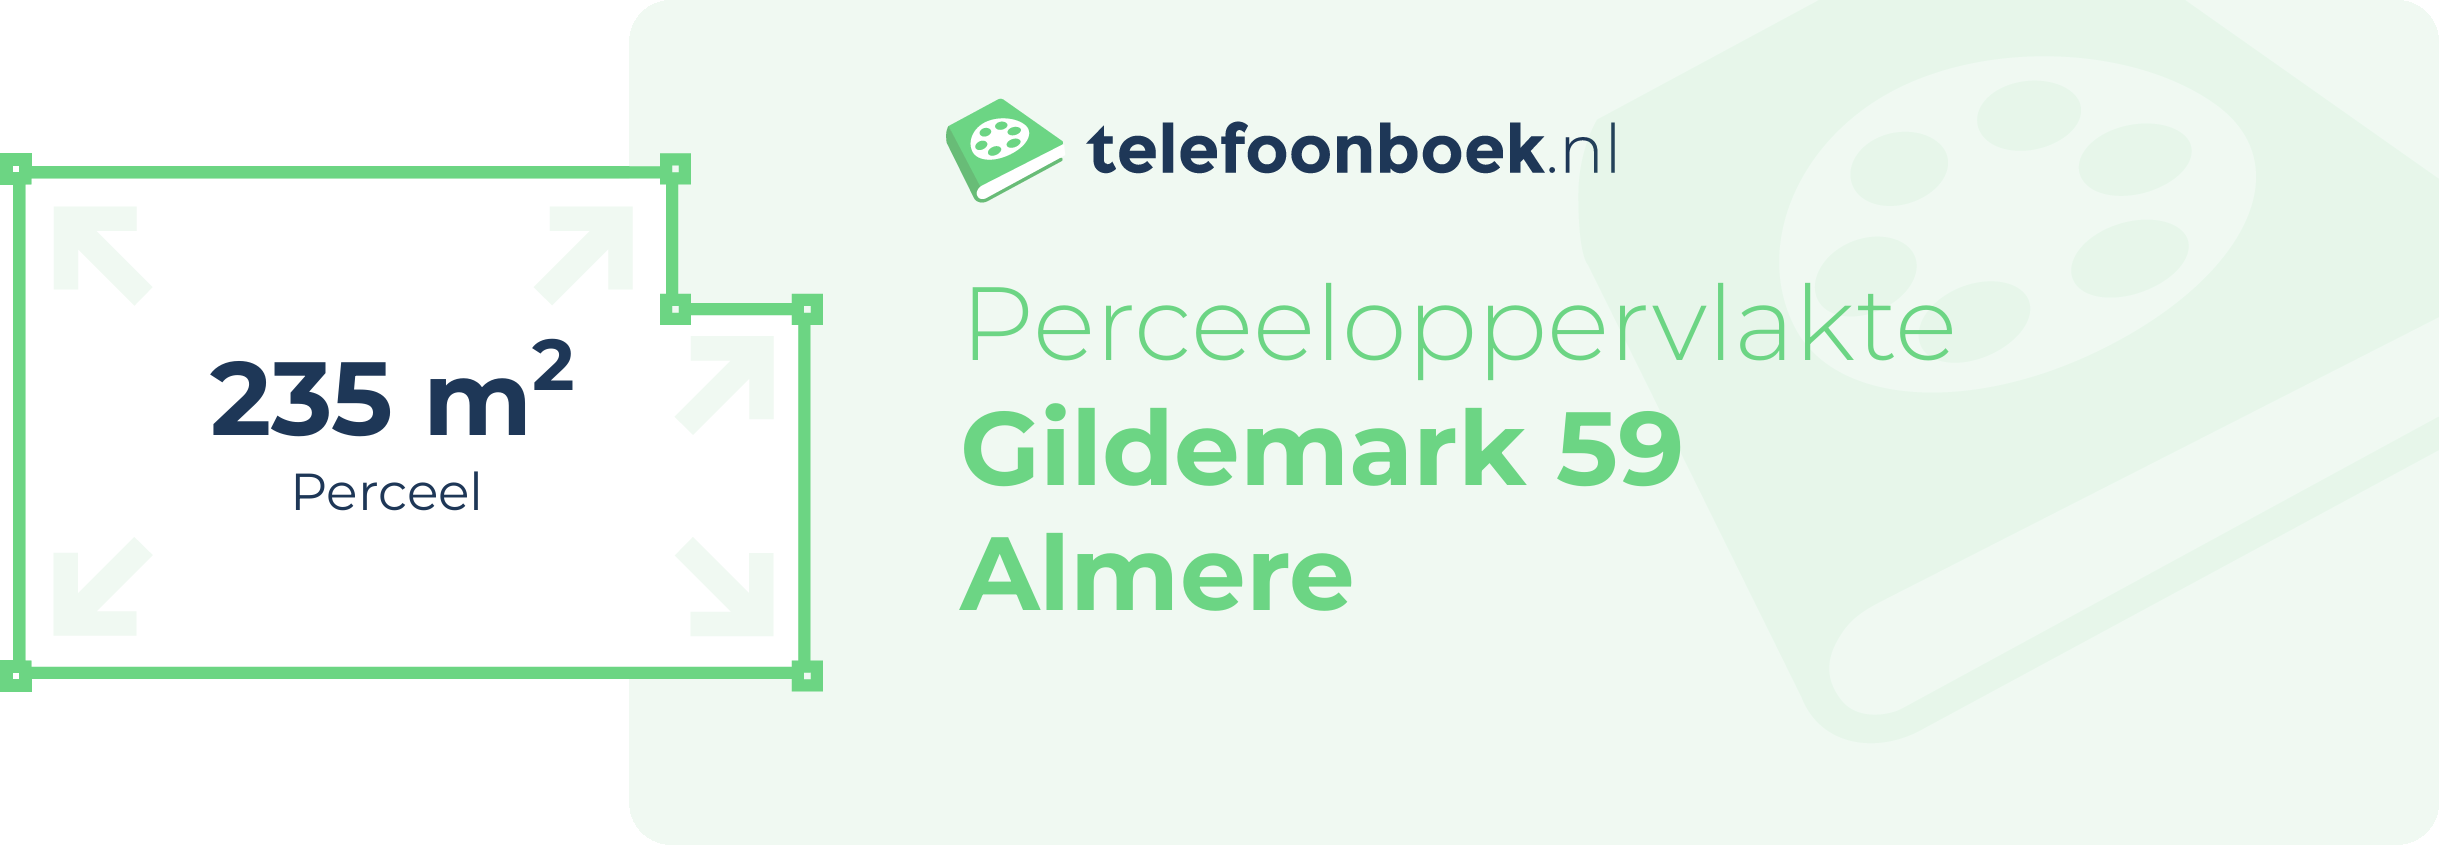 Perceeloppervlakte Gildemark 59 Almere